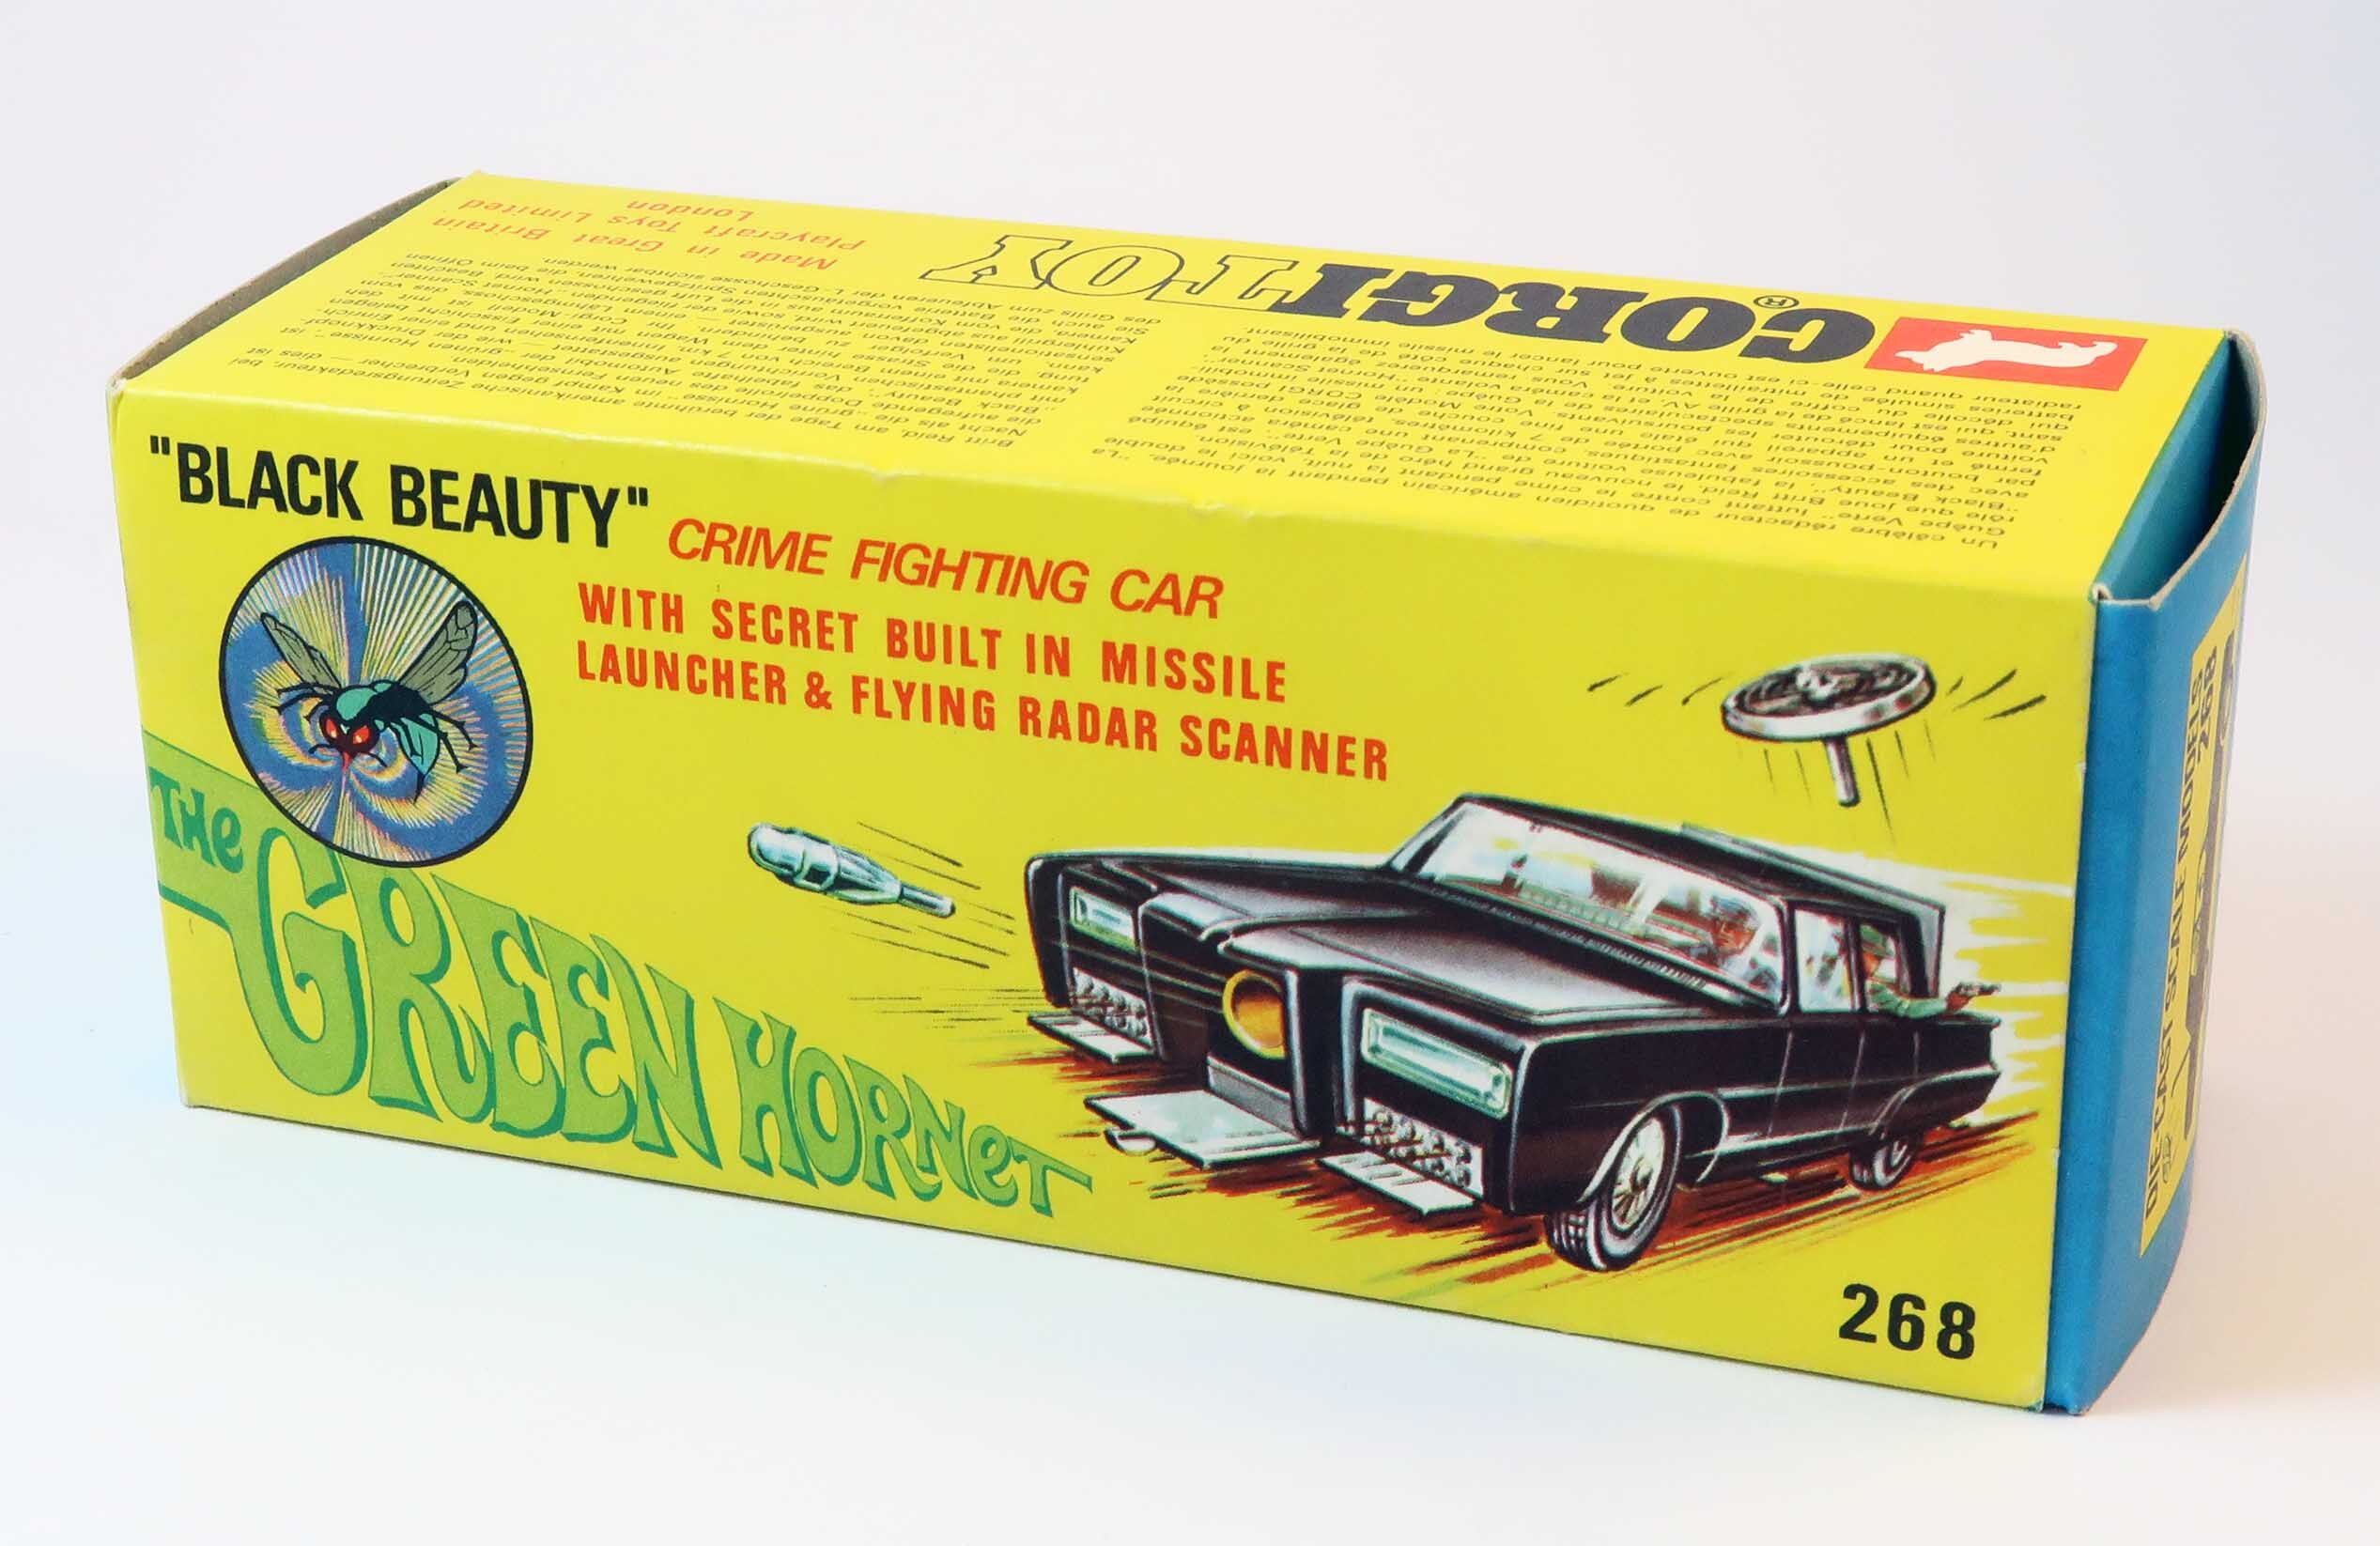 Black Beauty Green Hornet CORGI Toys 1966